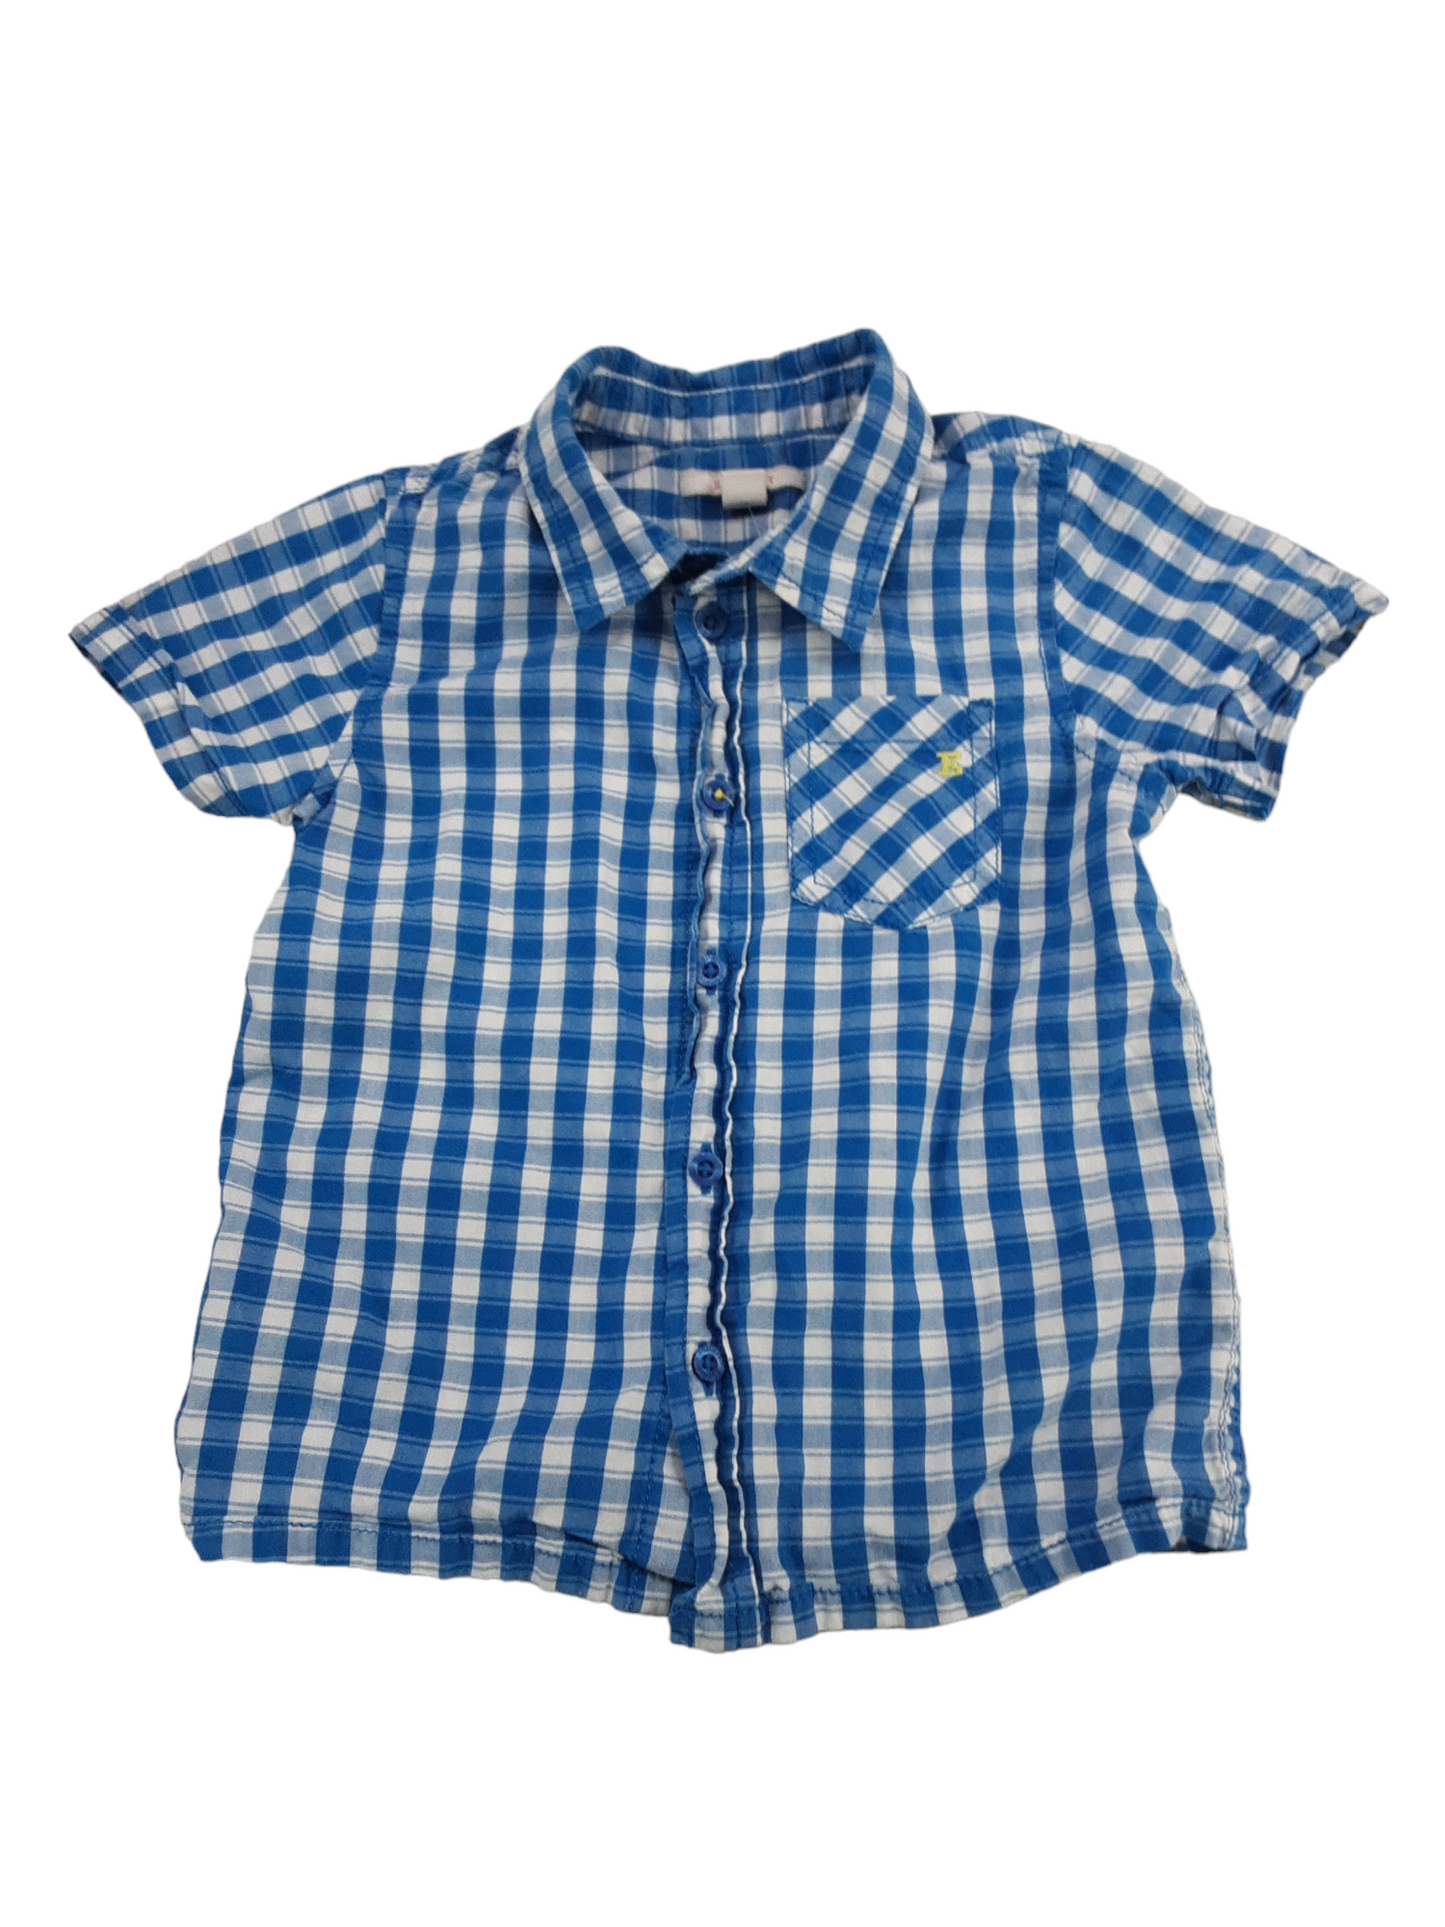 Blue & white button front shirt size 18-24months